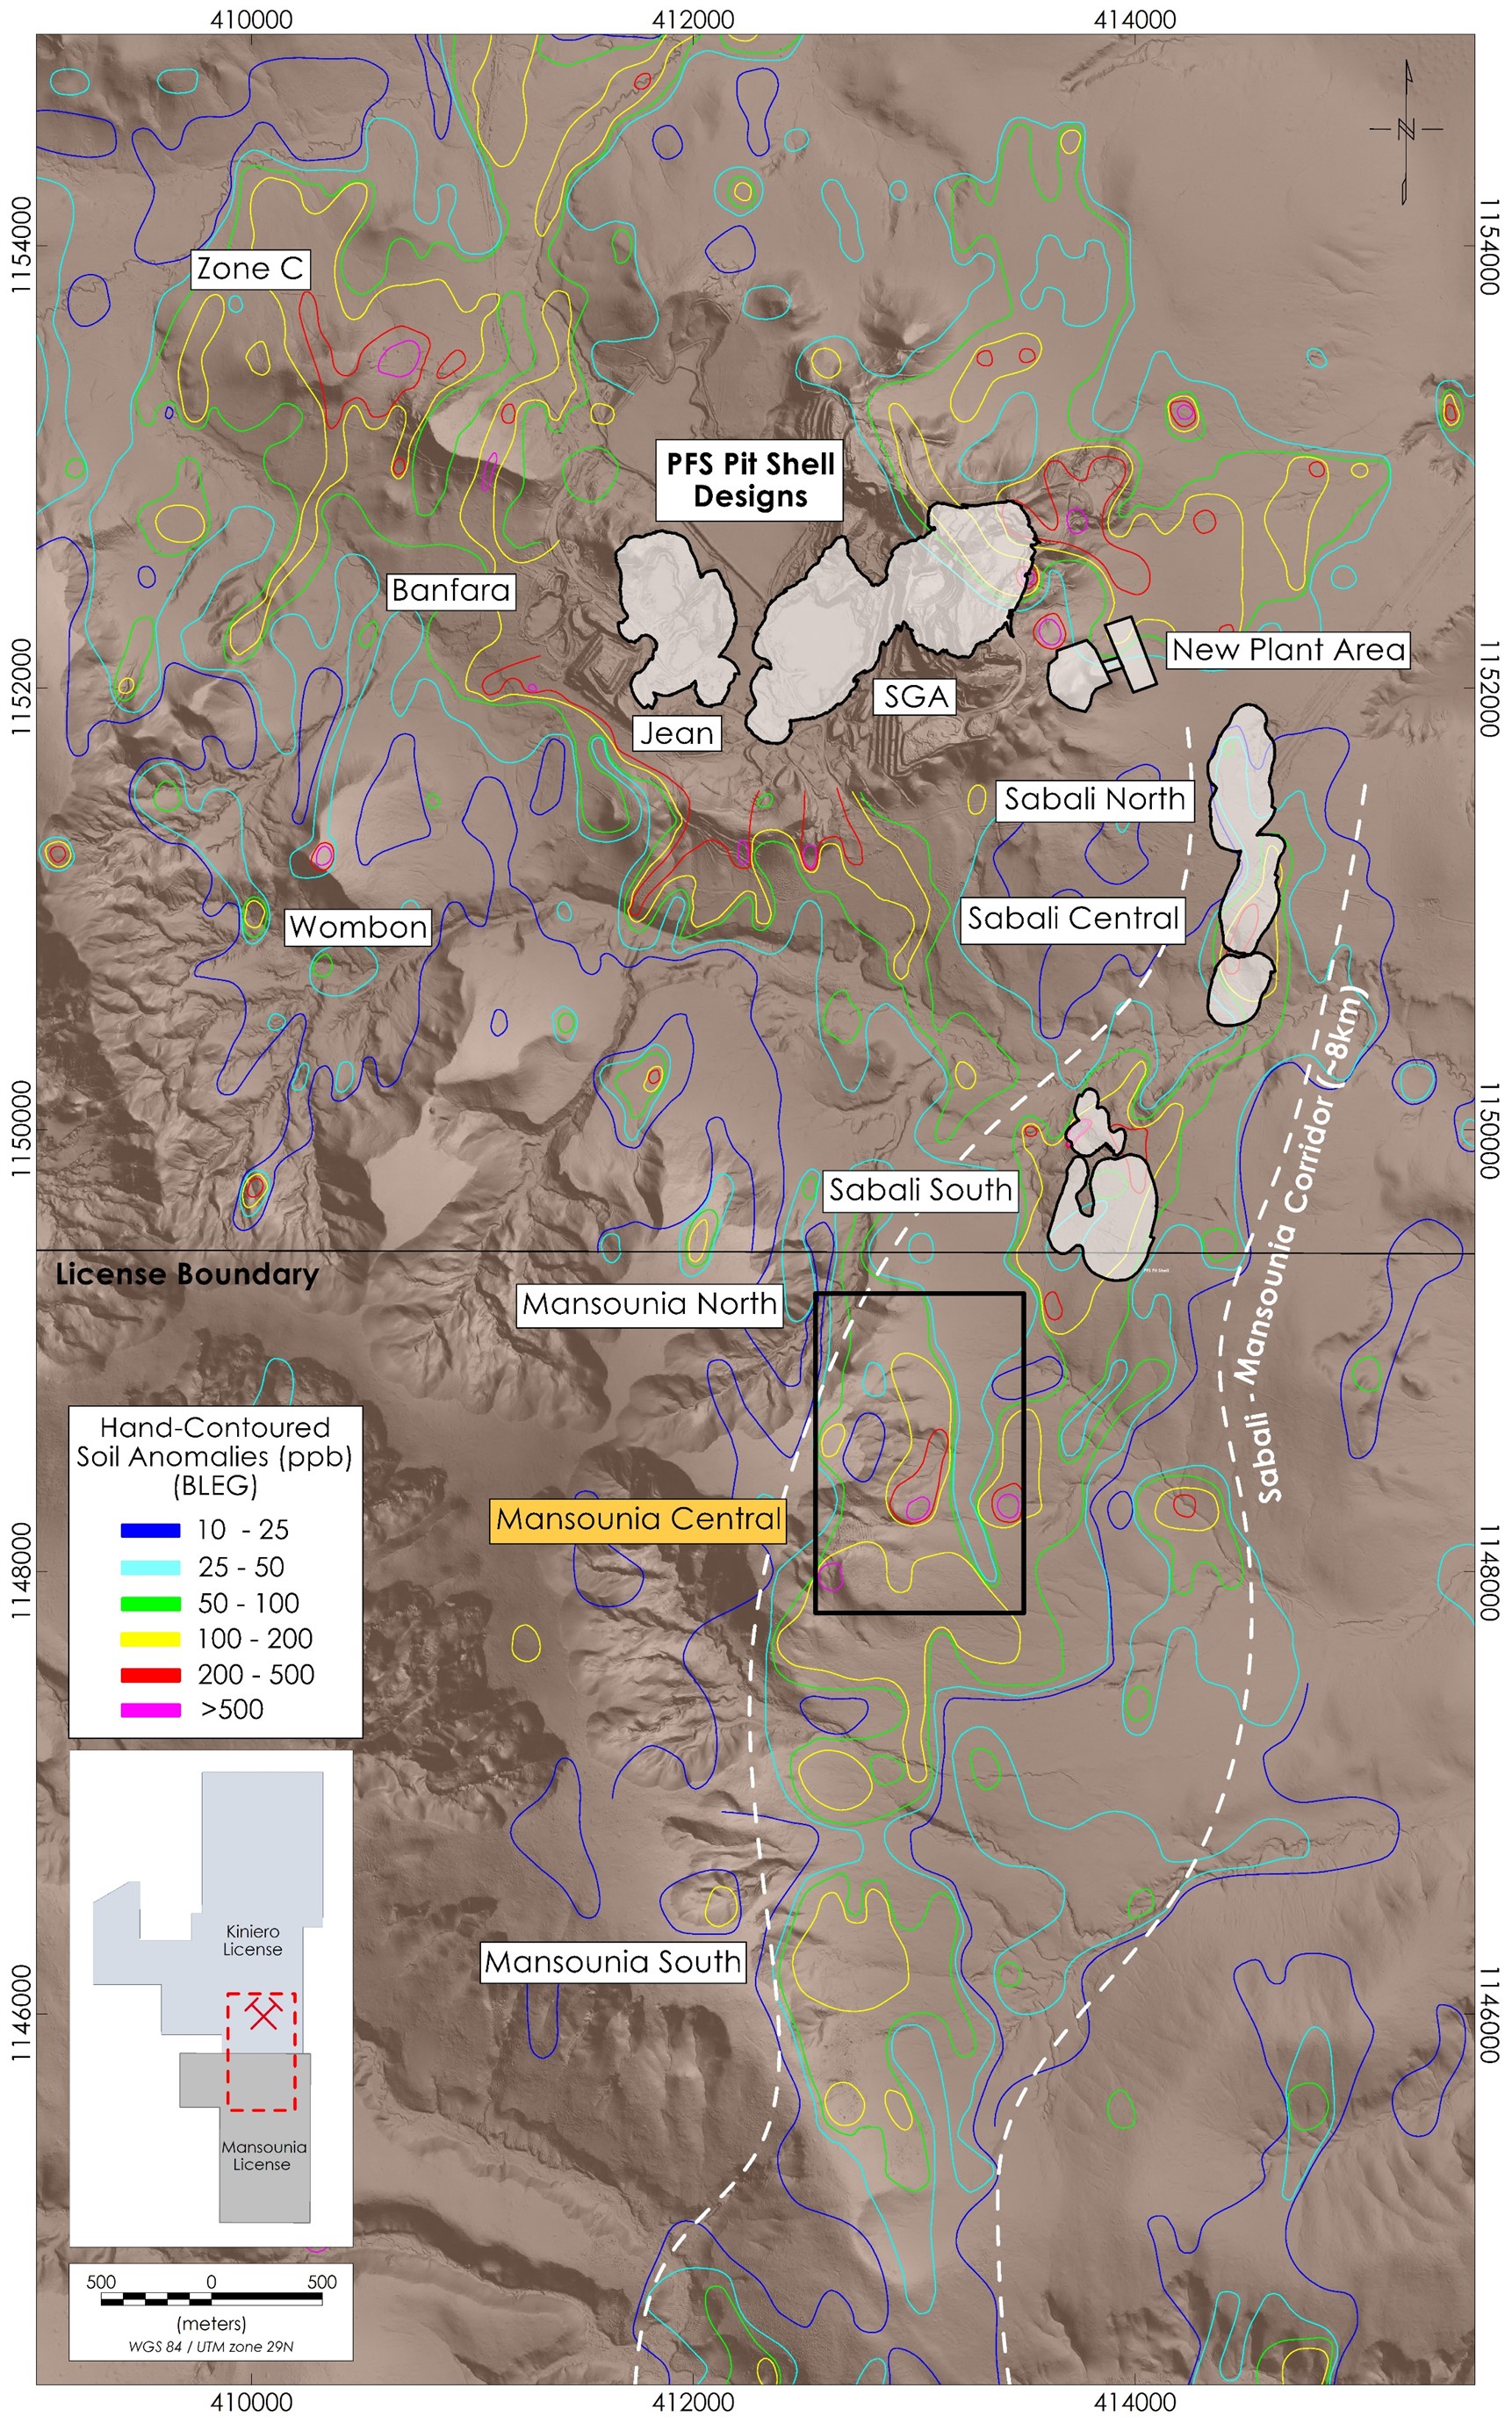 Soil Anomalies at the Kiniero Gold District